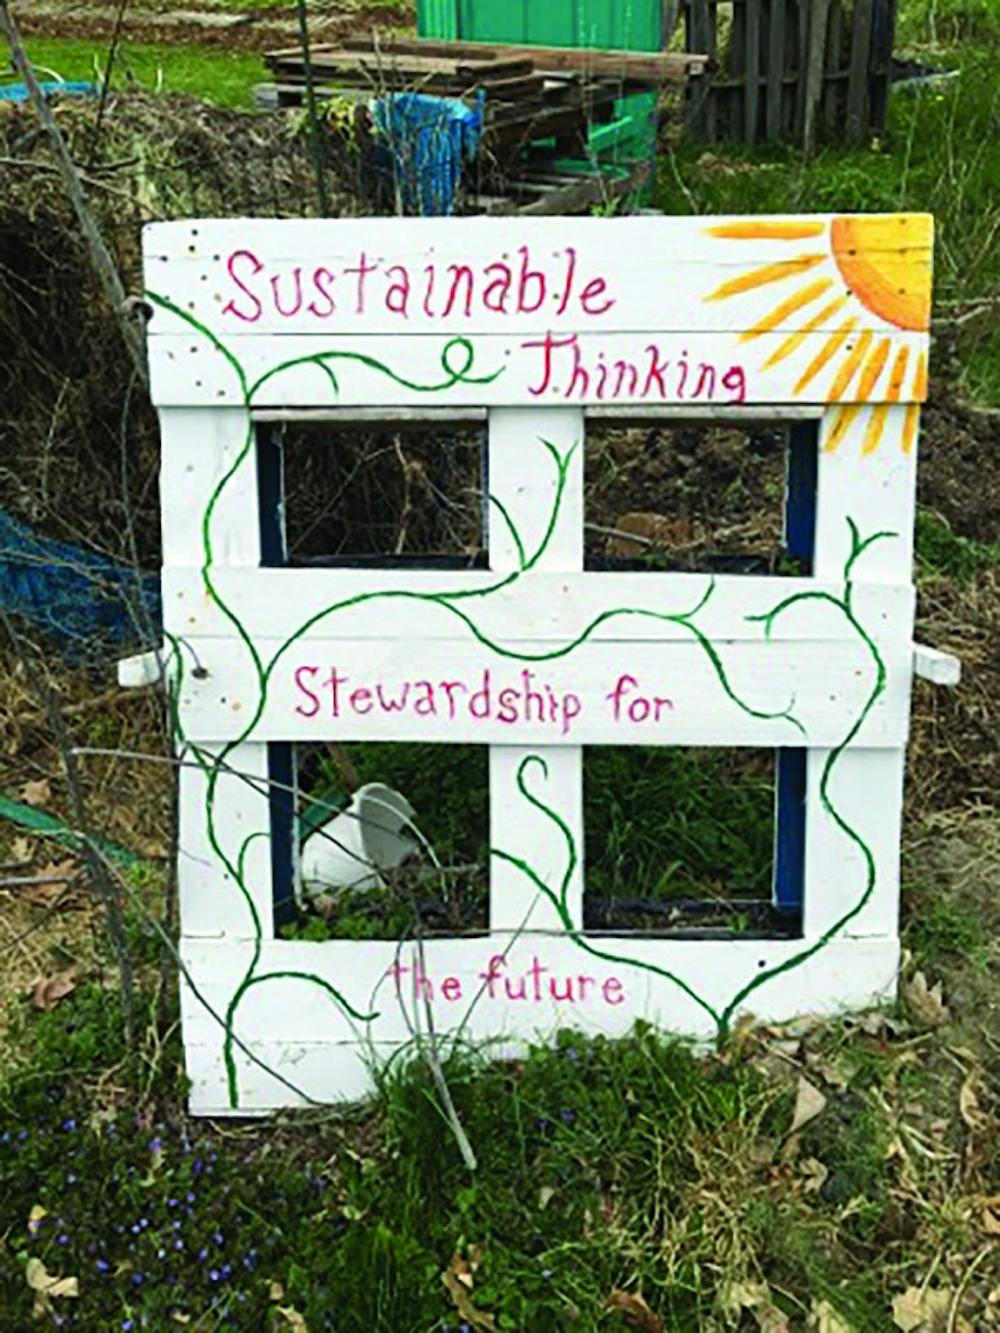 Students work toward sustainability within SU farm